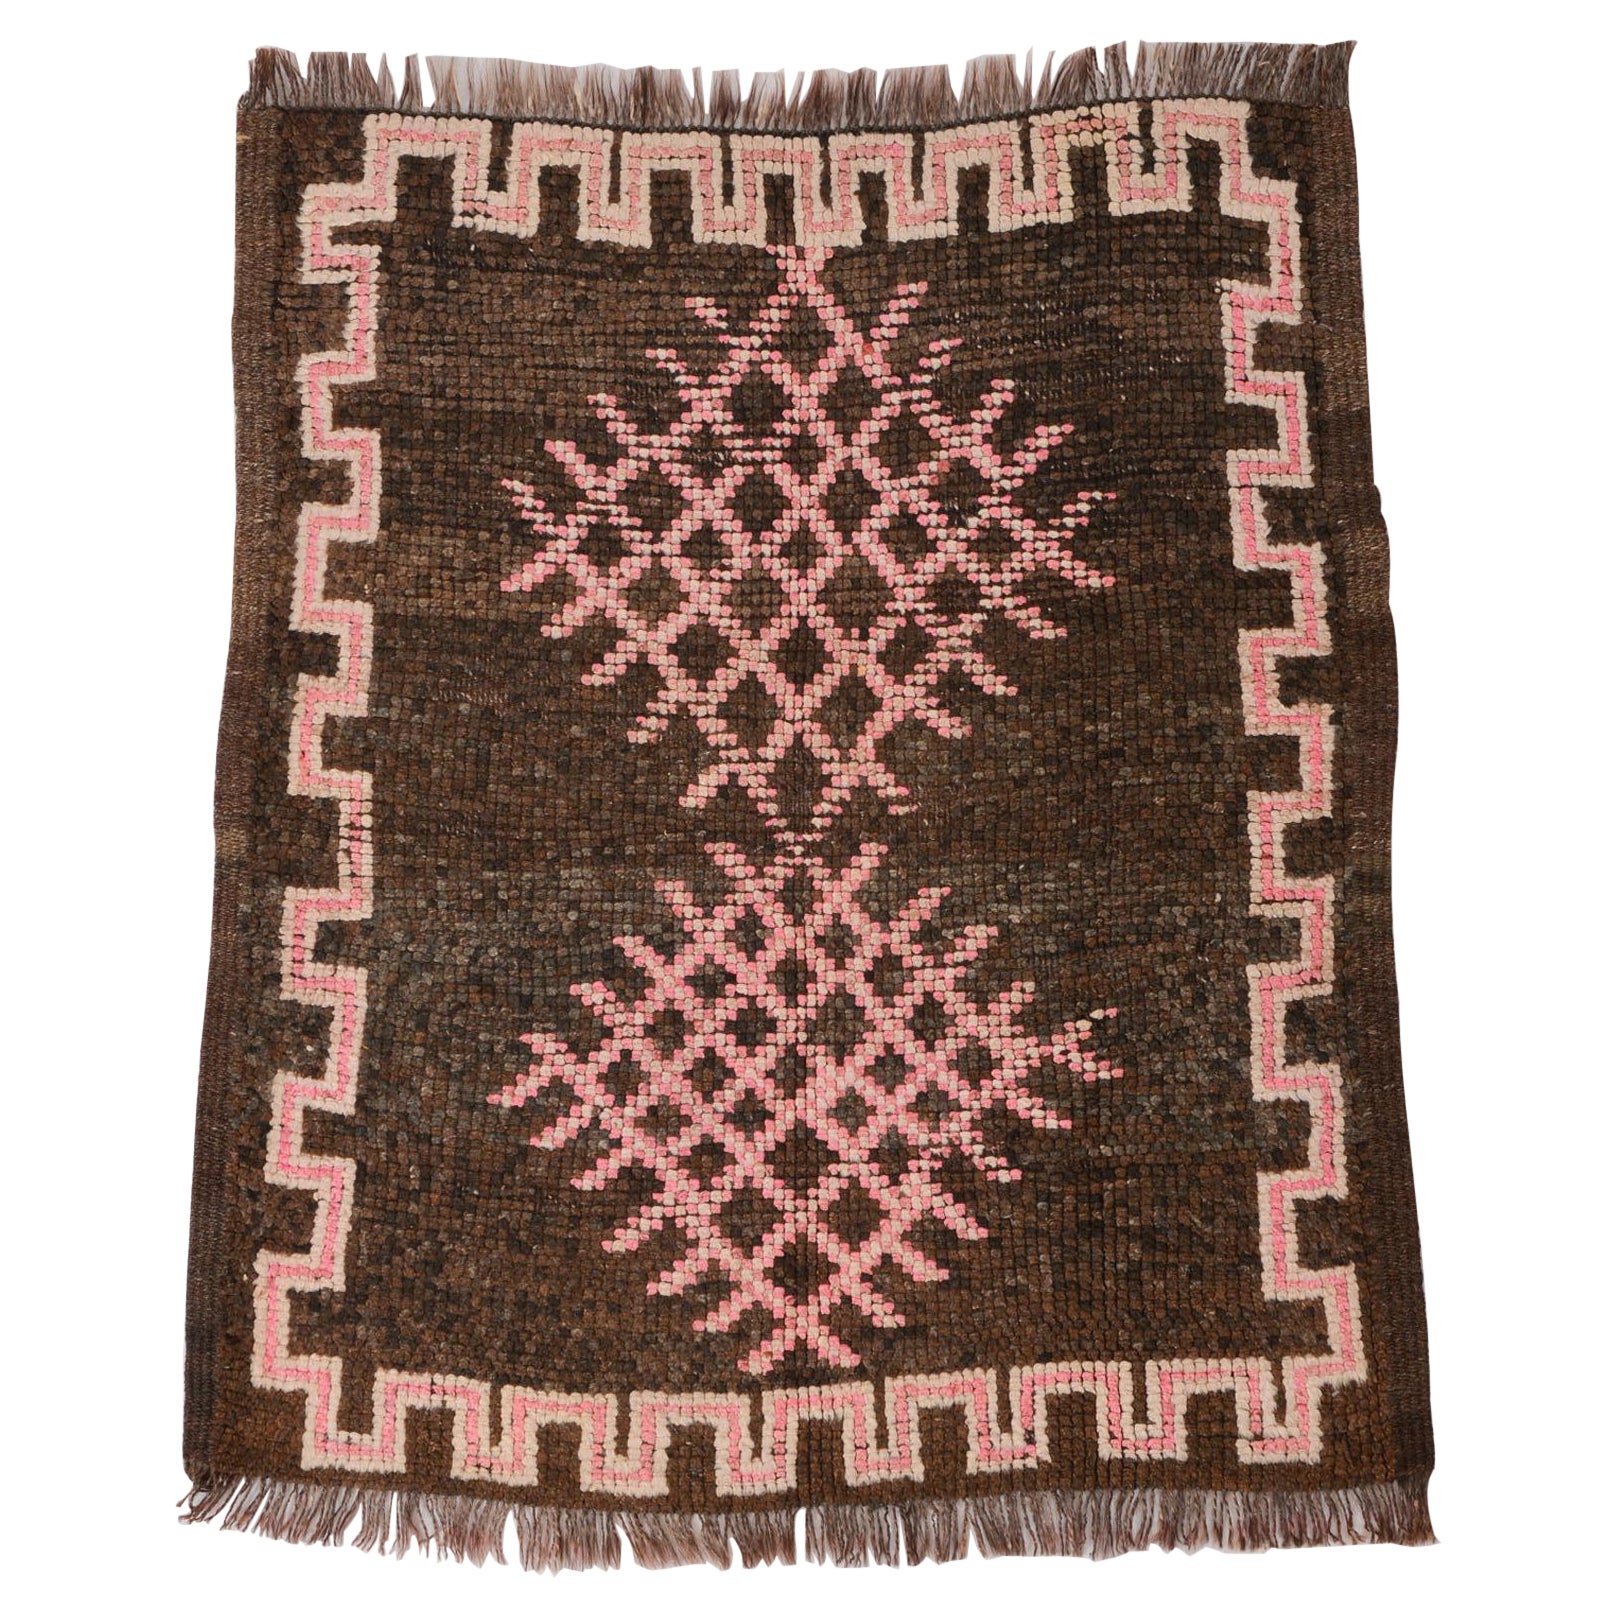 Petit tapis naïf marocain simple et ancien